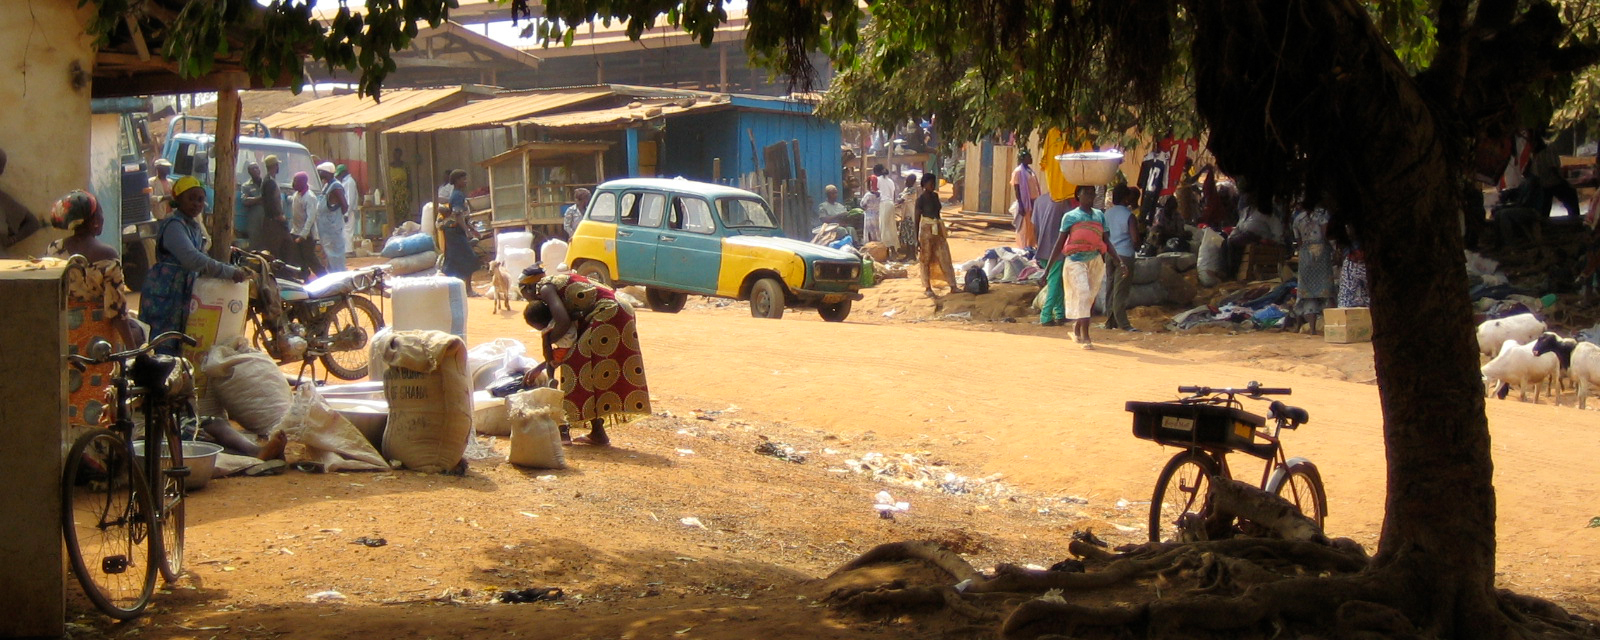 2008.01 Beisel - Markttag in Ananekrom, Ghana